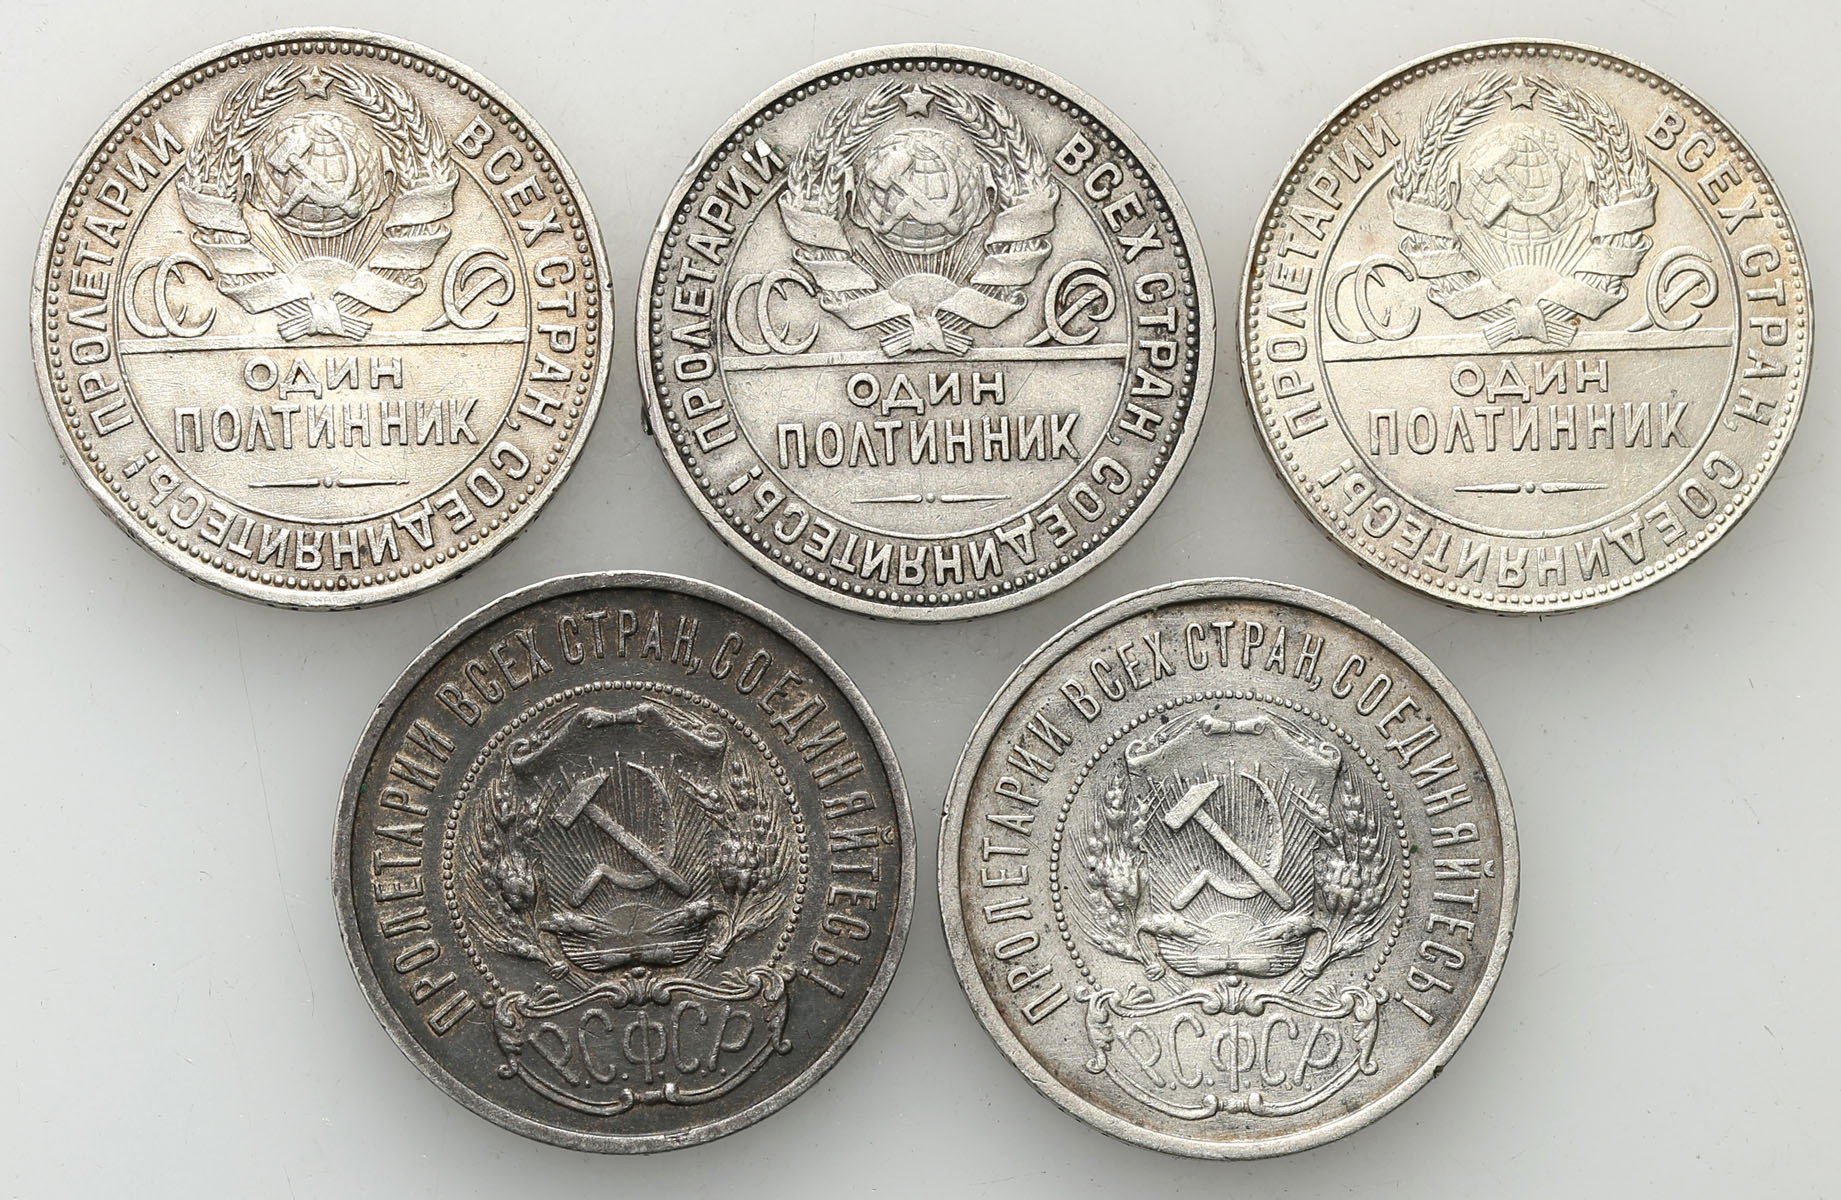 Rosja. 50 kopiejek (połtinnik) 1921-1926, zestaw 5 monet